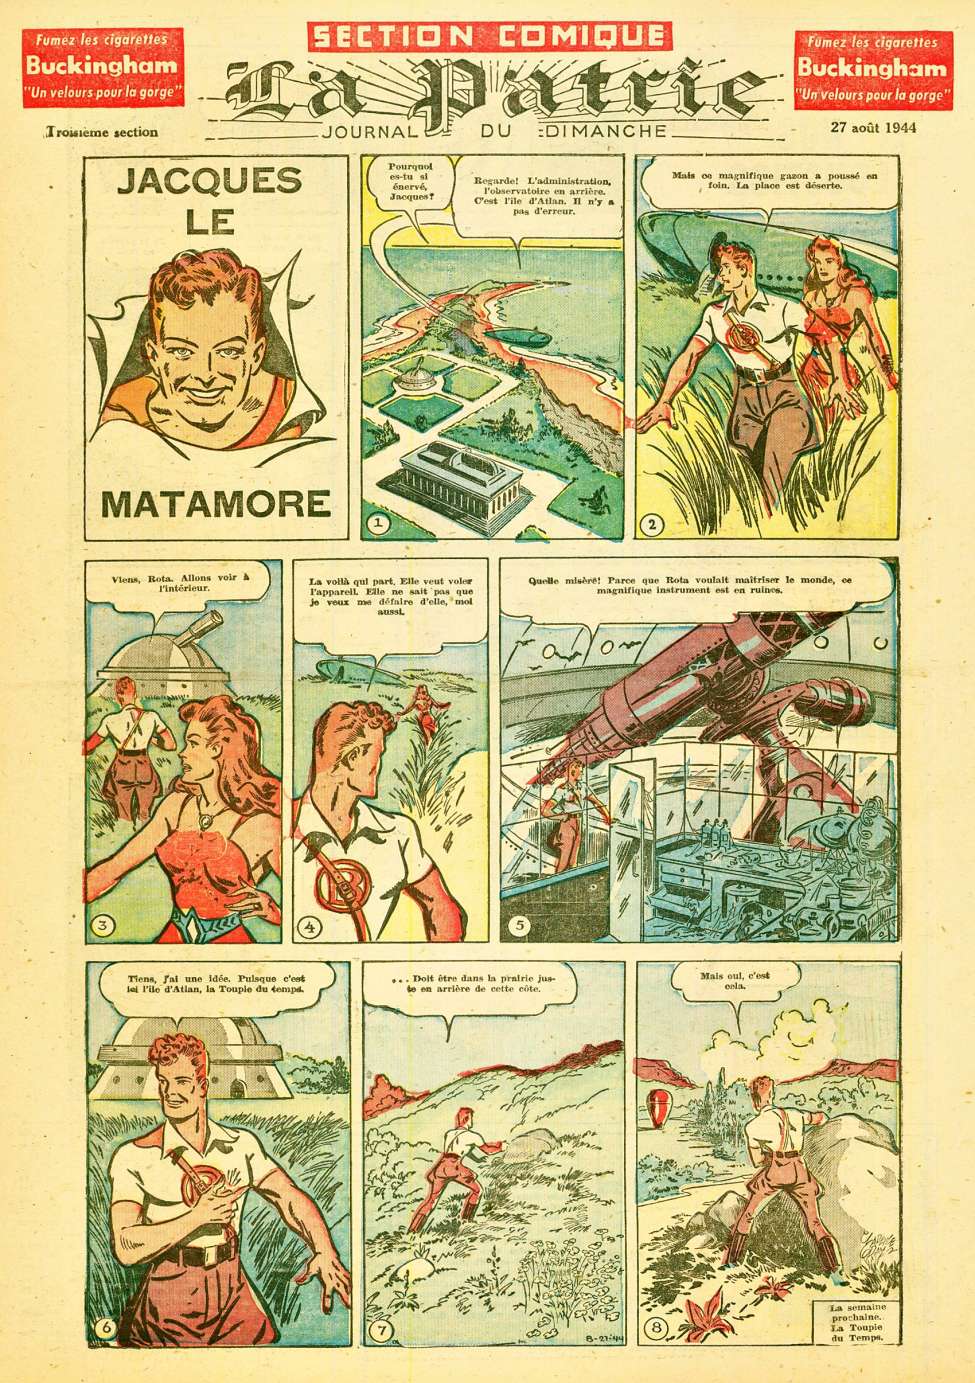 Comic Book Cover For La Patrie - Section Comique (1944-08-27)